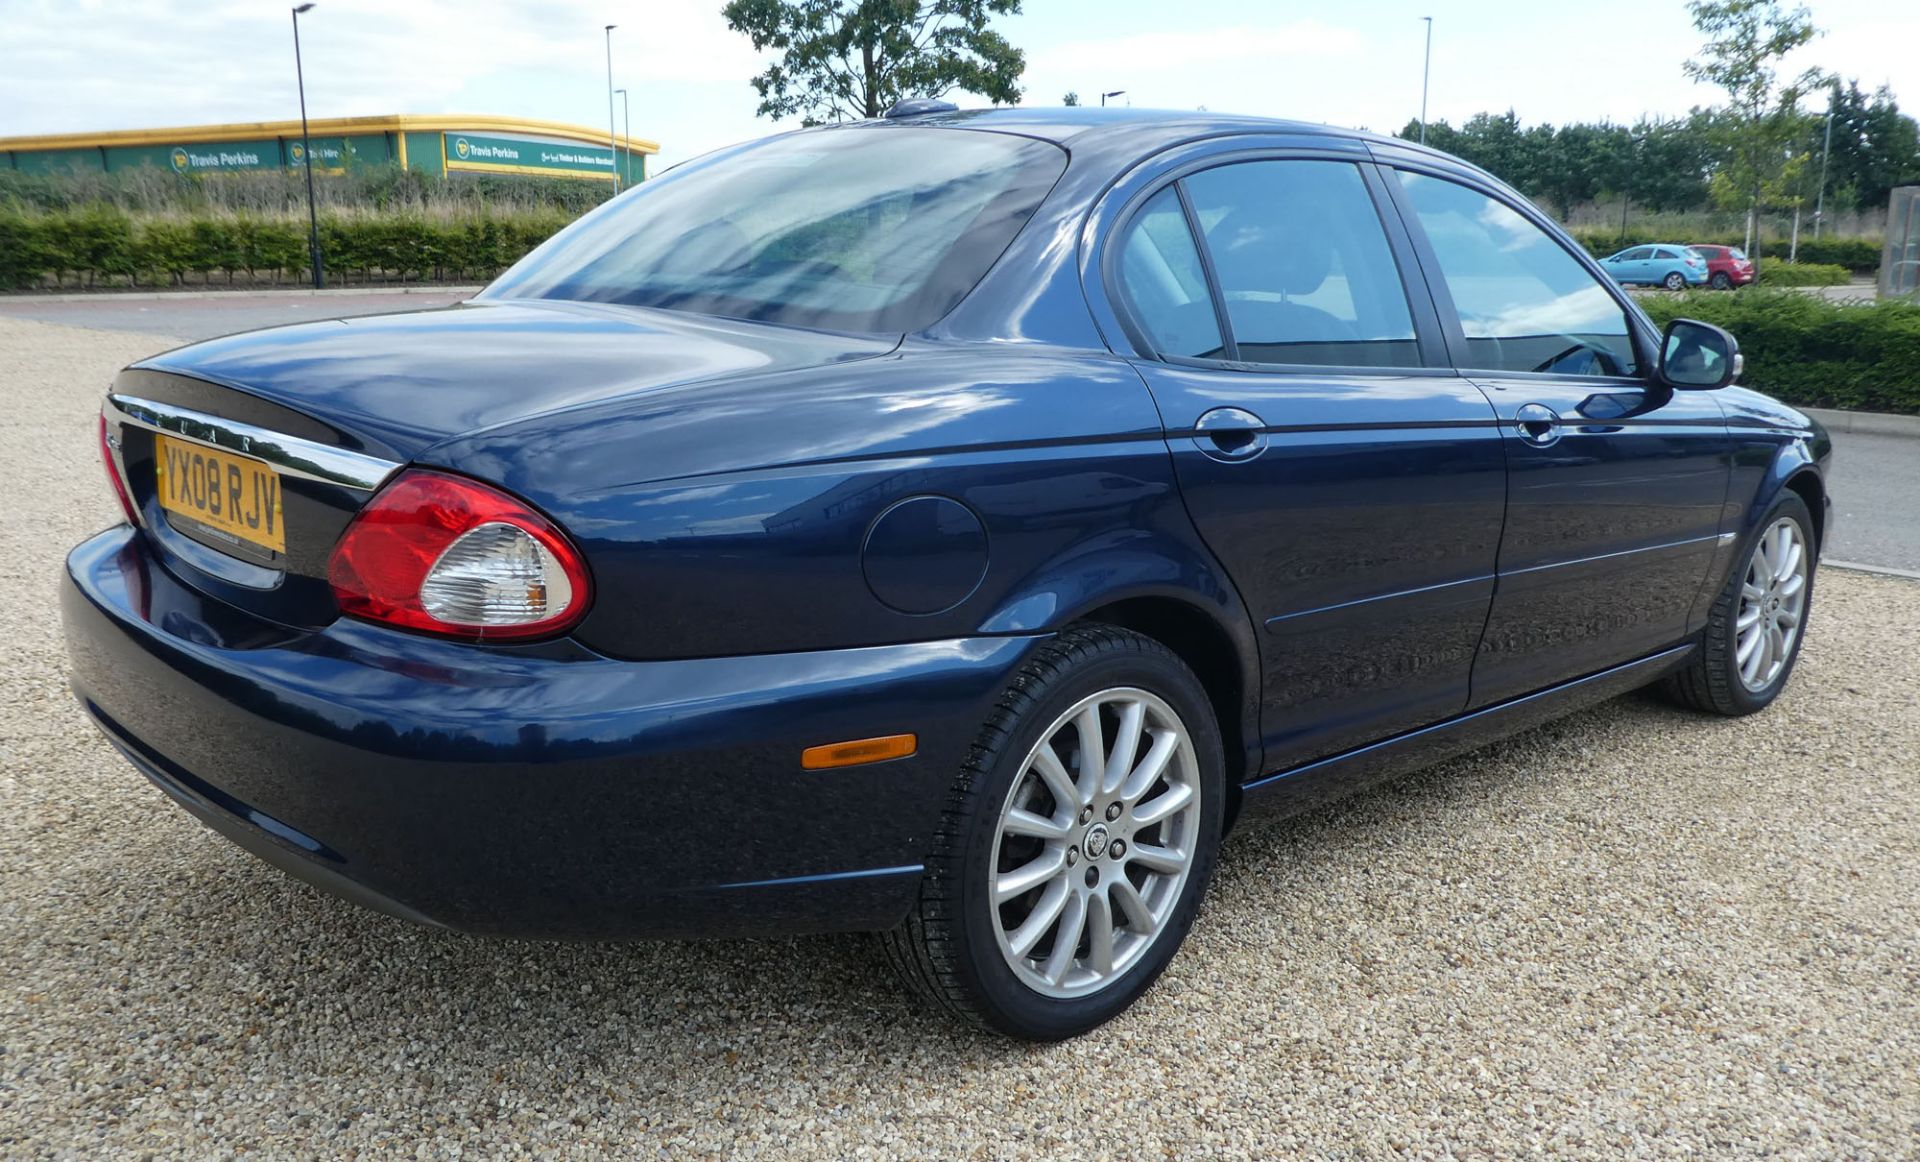 YX08 RJV, Jaguar X-Type S Auto in blue, first registered 28.03.2008, two keys, 2198cc, diesel, 4 - Image 4 of 7